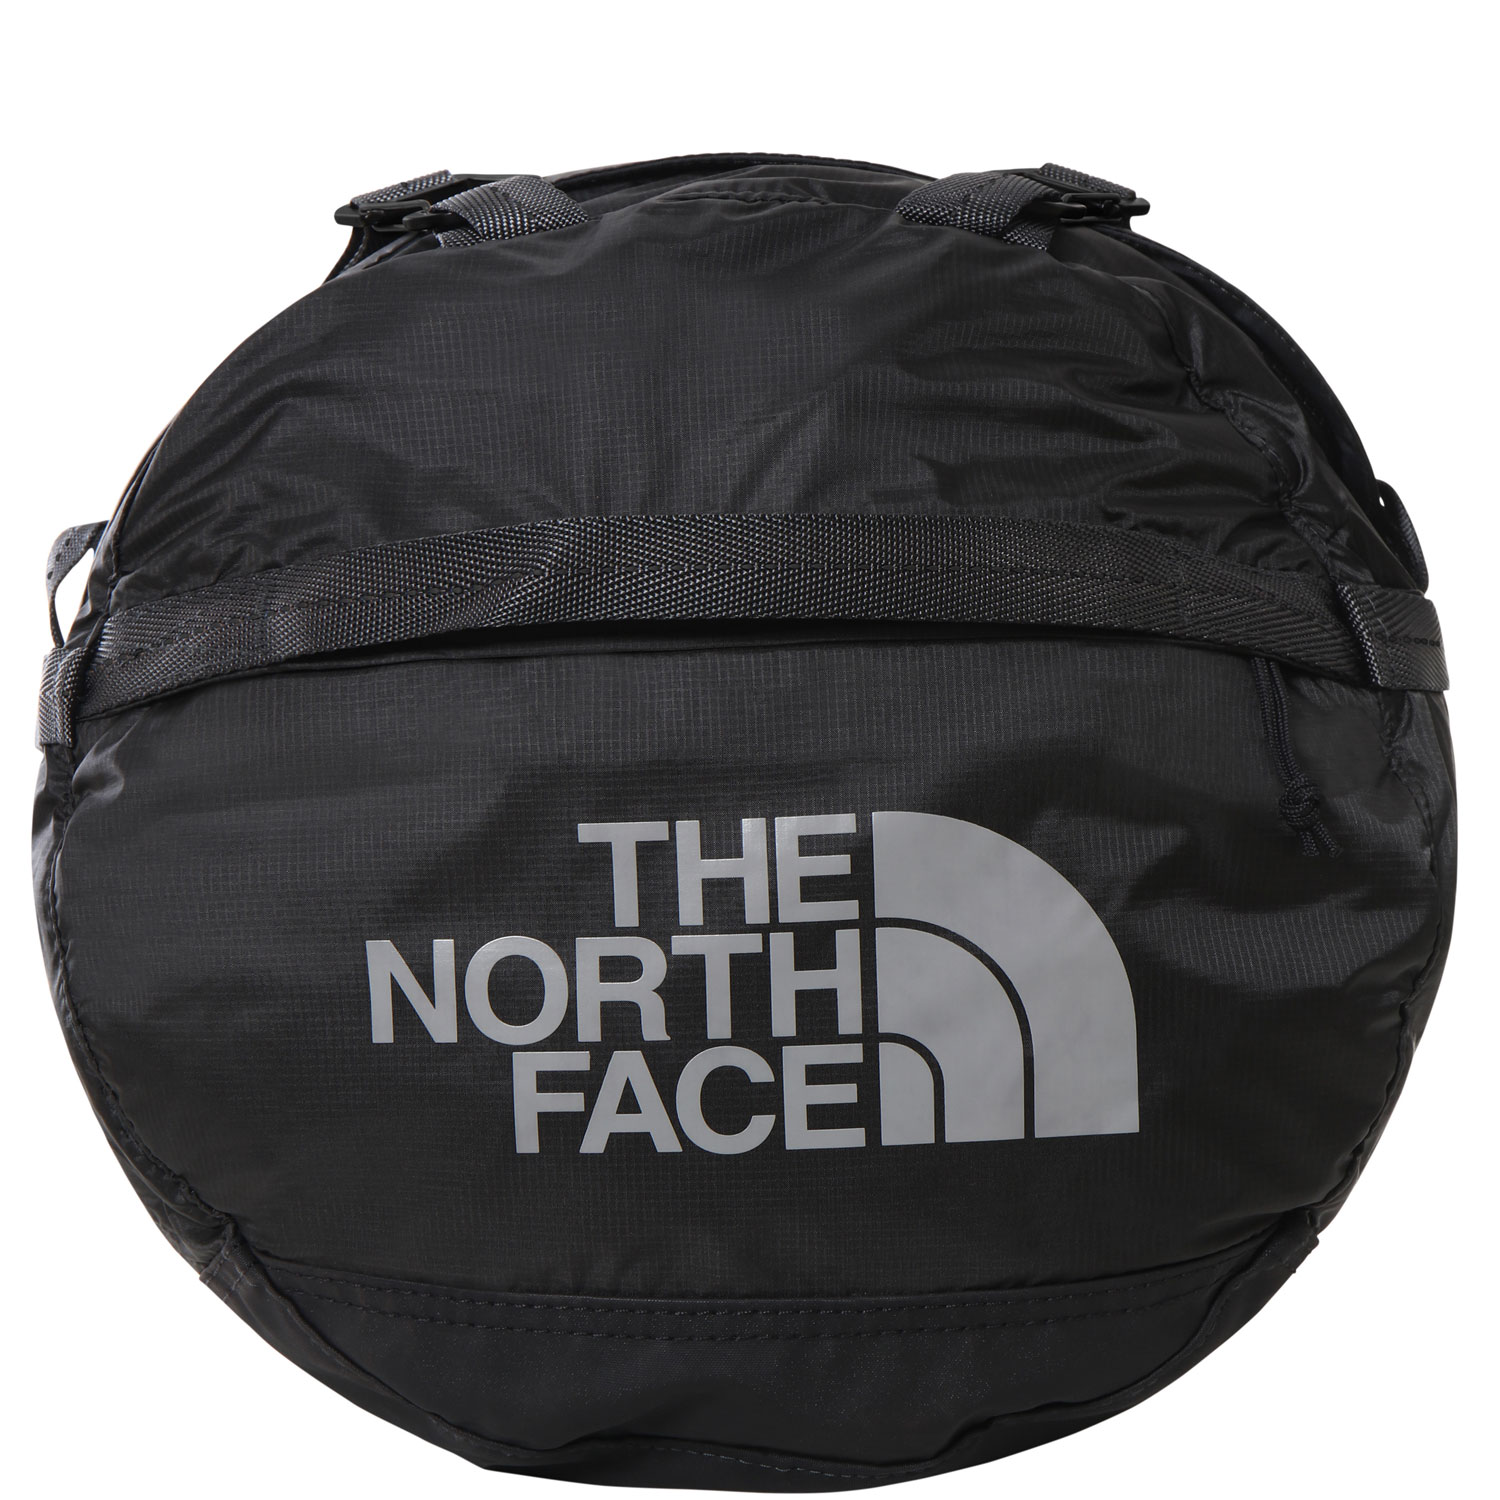 The North Face Reisetasche/Rucksack Flyweight Duffel asphalt grey/black